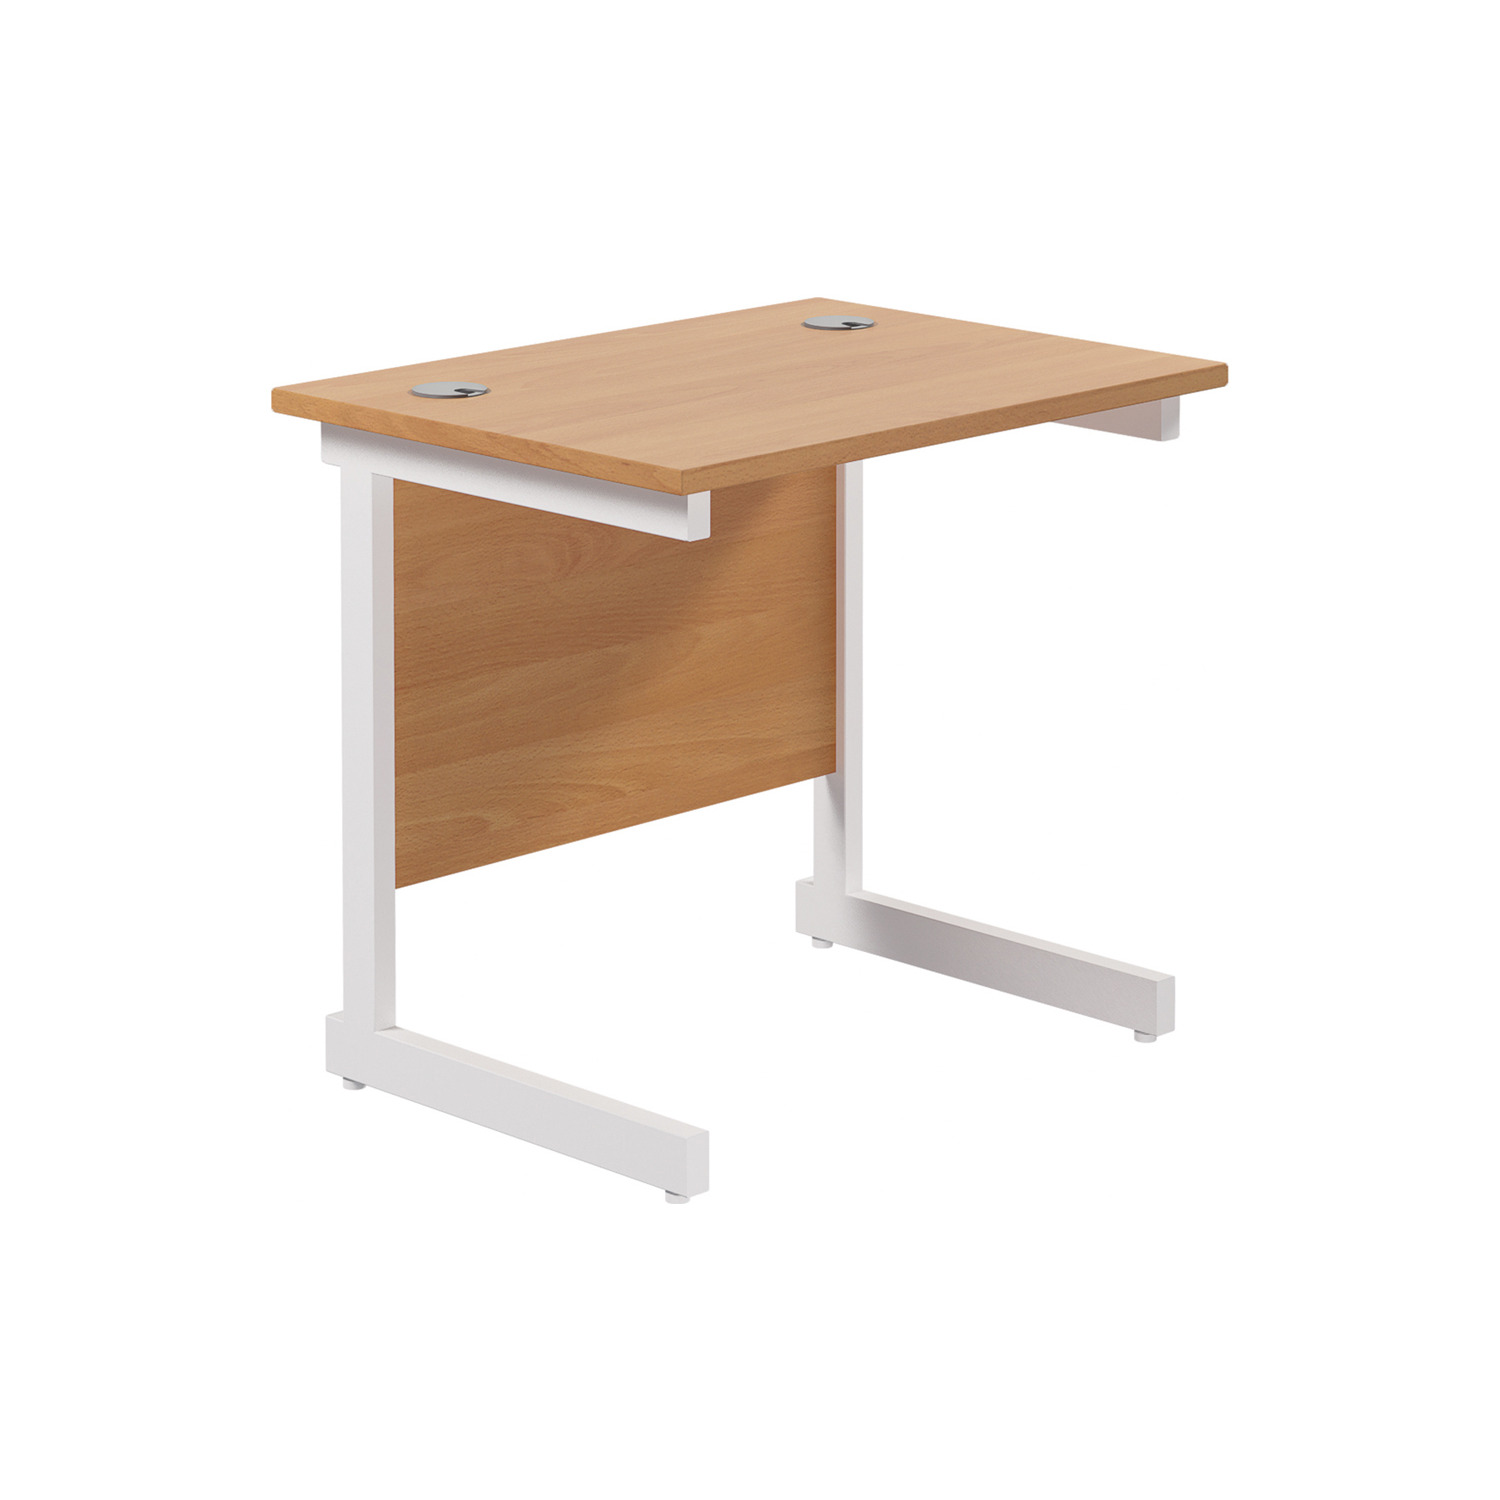 Progress I Narrow Rectangular Desk, 80wx60dx73h (cm), White/Beech